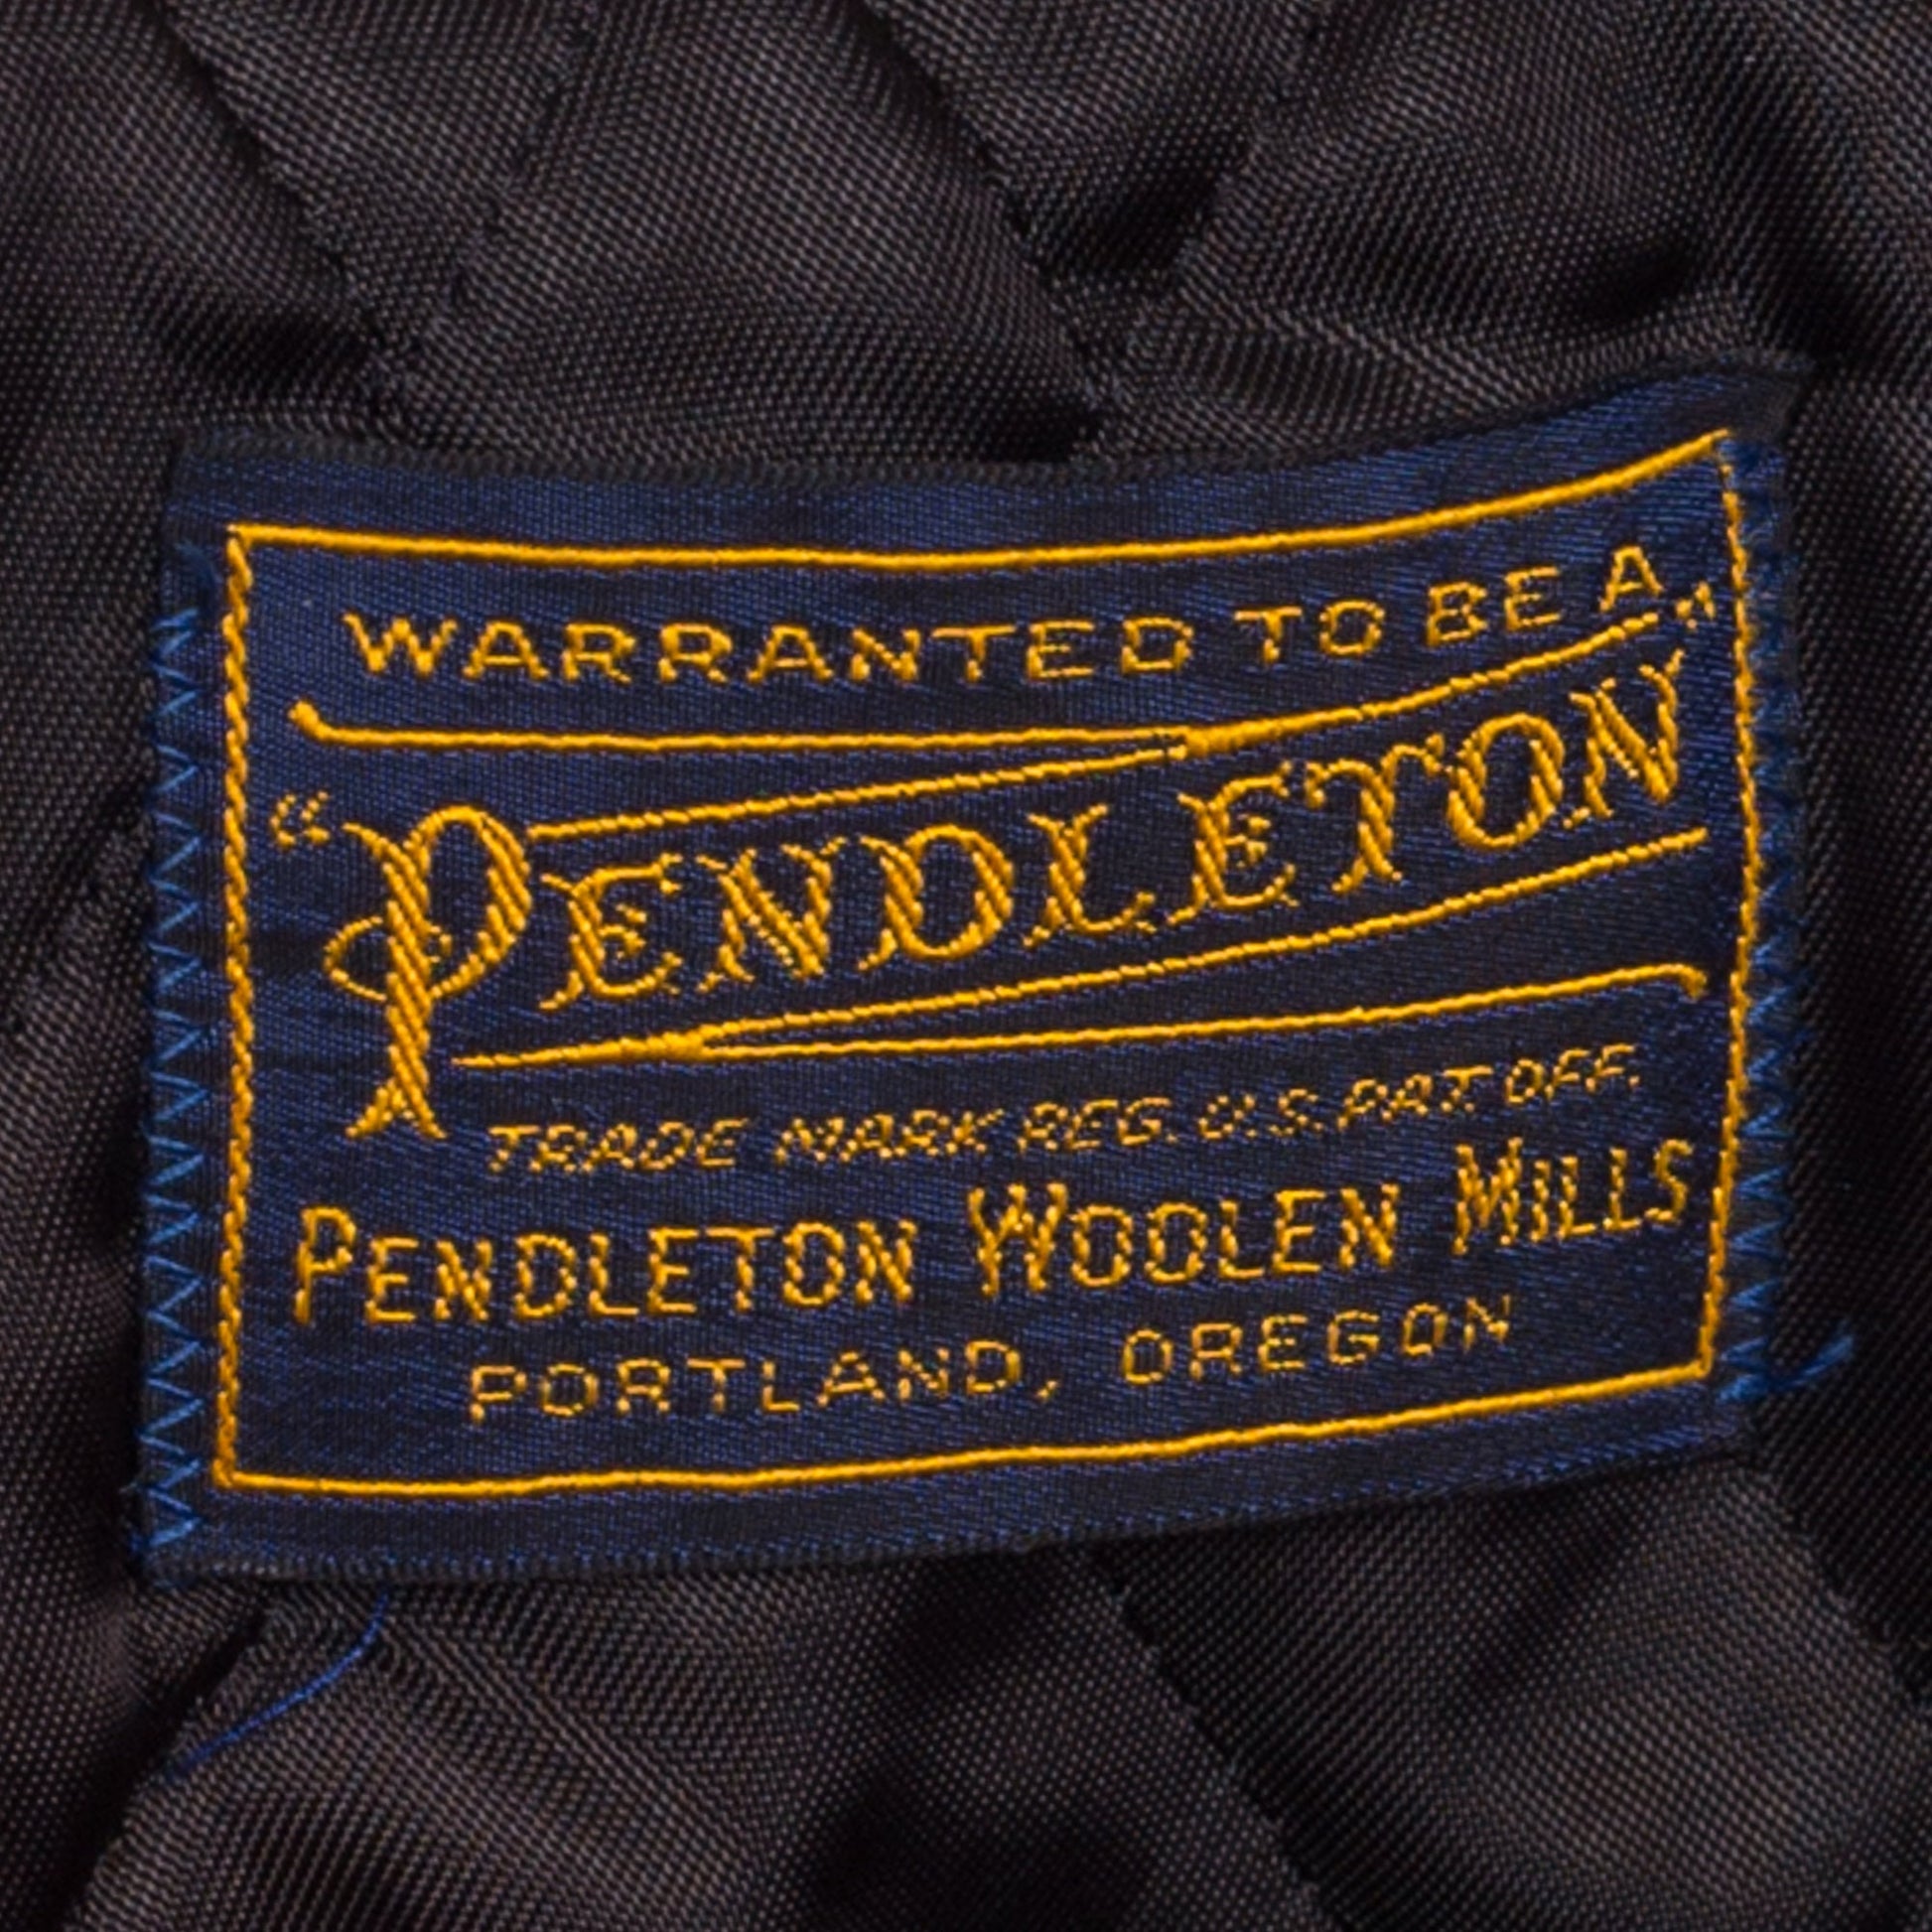 50s 60s Pendleton Red Plaid Wool Coat - Large | Vintage Four Pocket Snap Up Talon Jacket Warm Winter Jacket